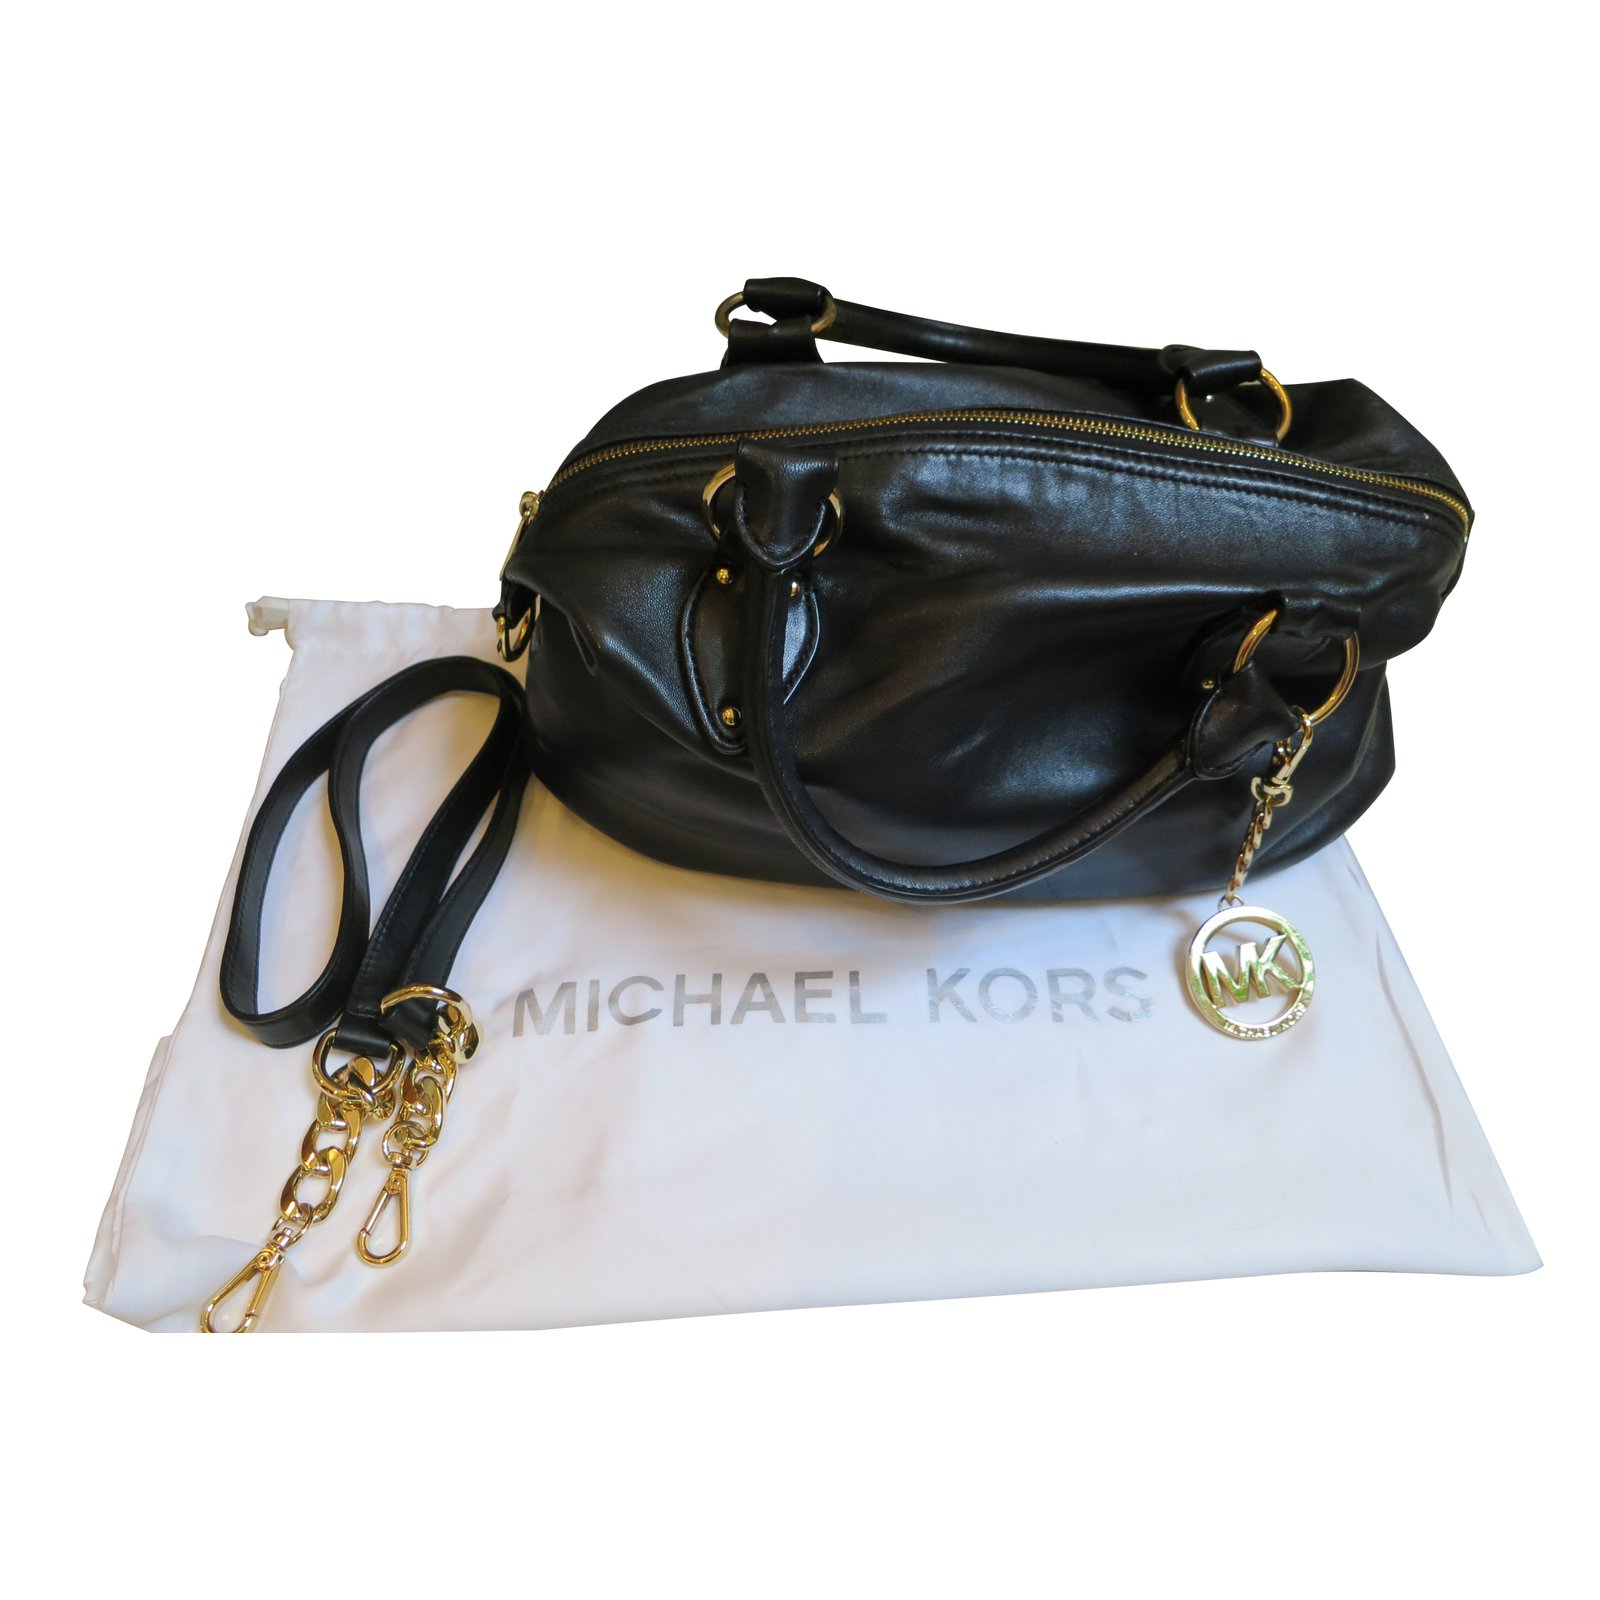 soft leather michael kors handbag